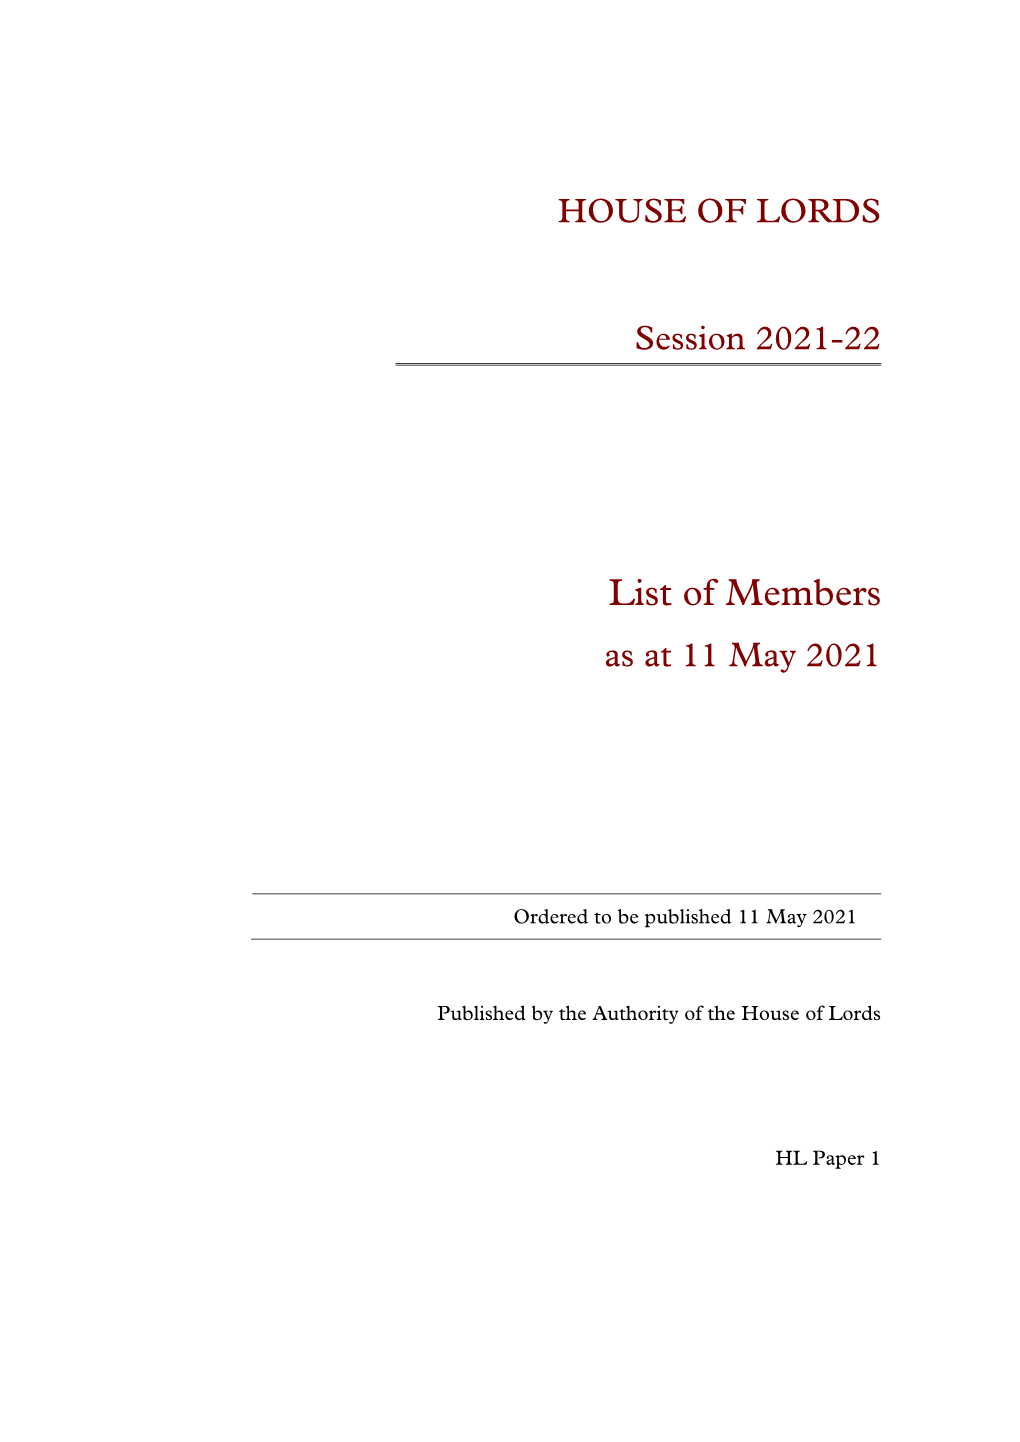 List of Members As at 11 May 2021